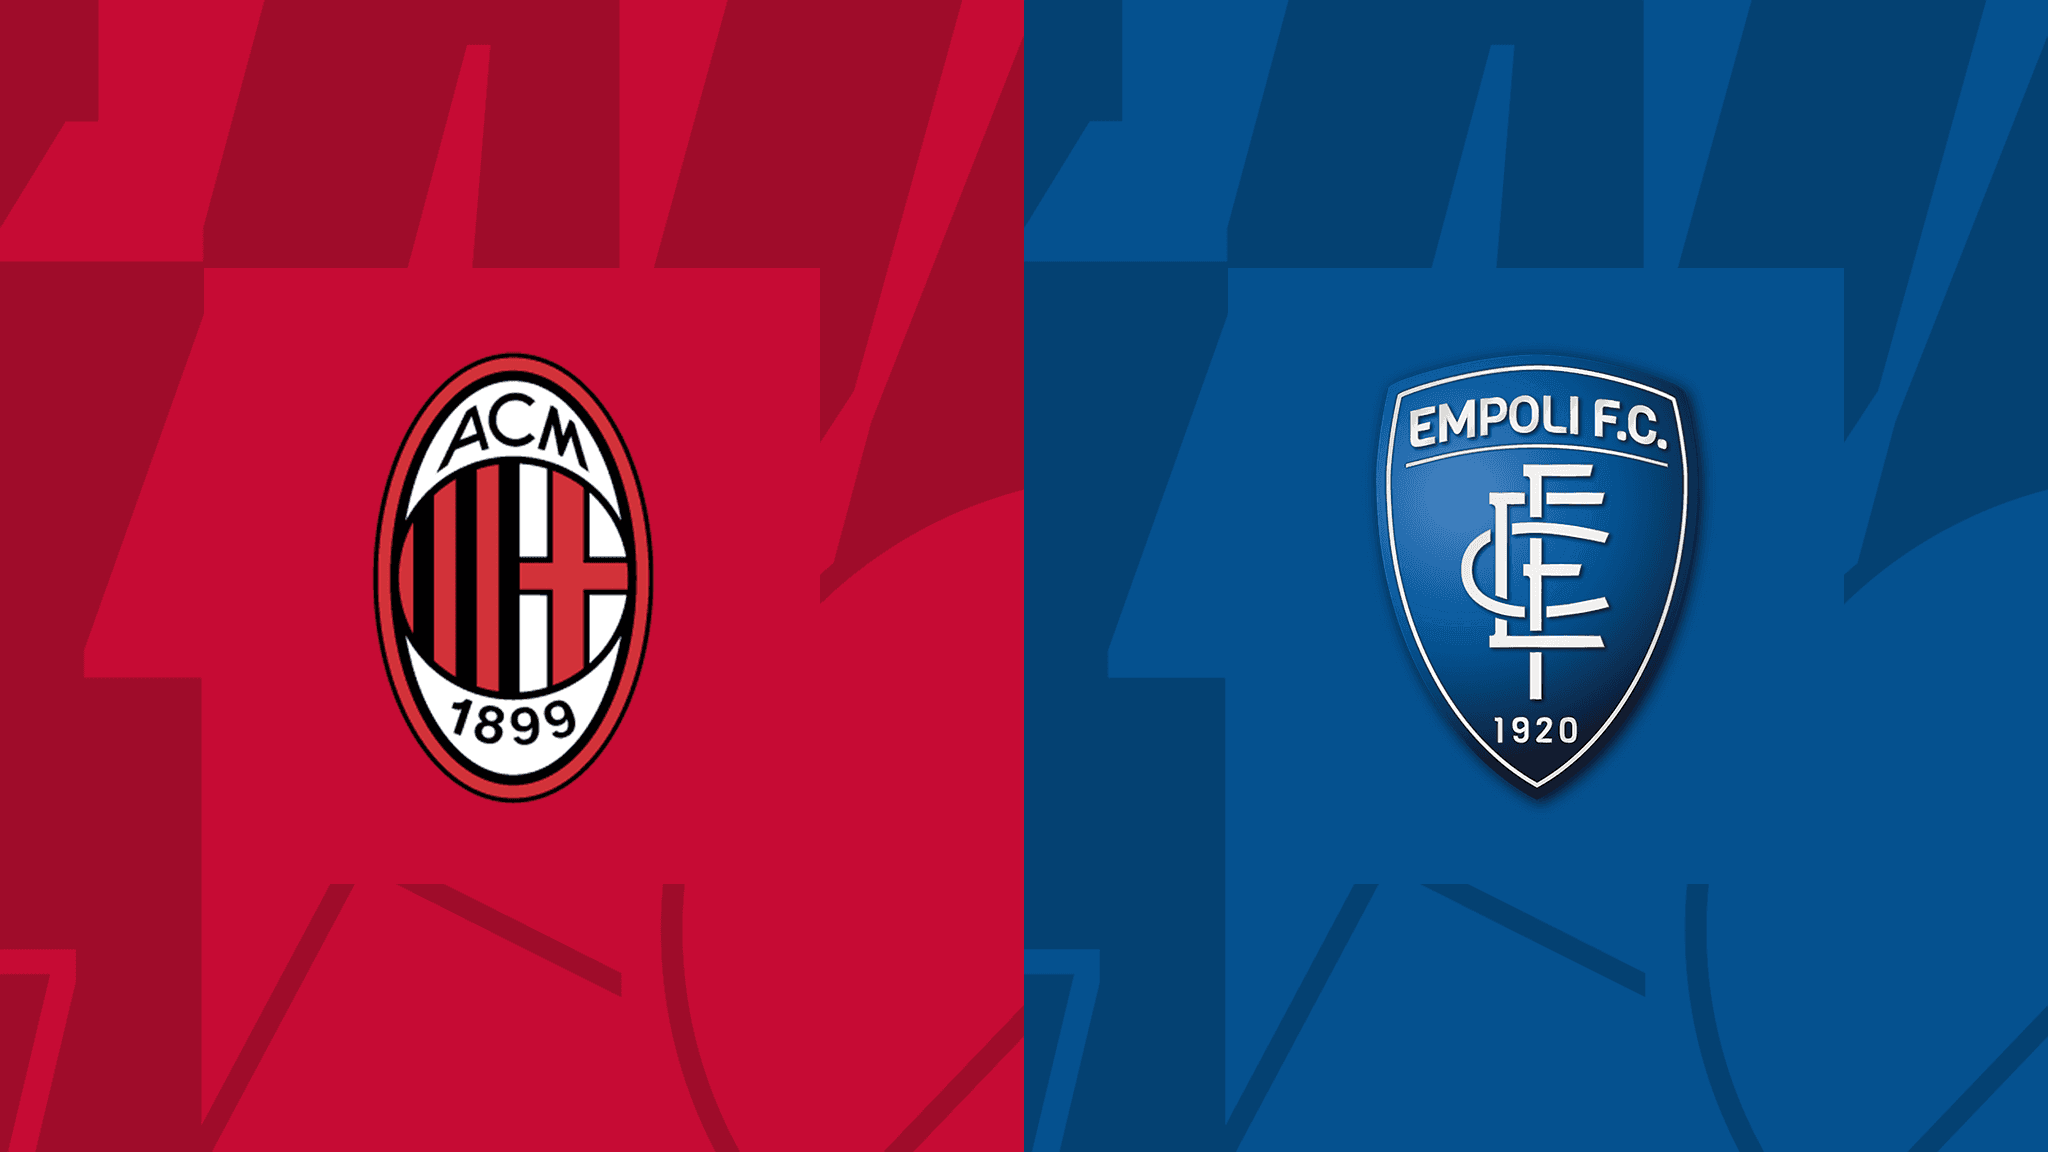  ITALY: Serie A AC Milan vs Empoli Live Score and Live Stream